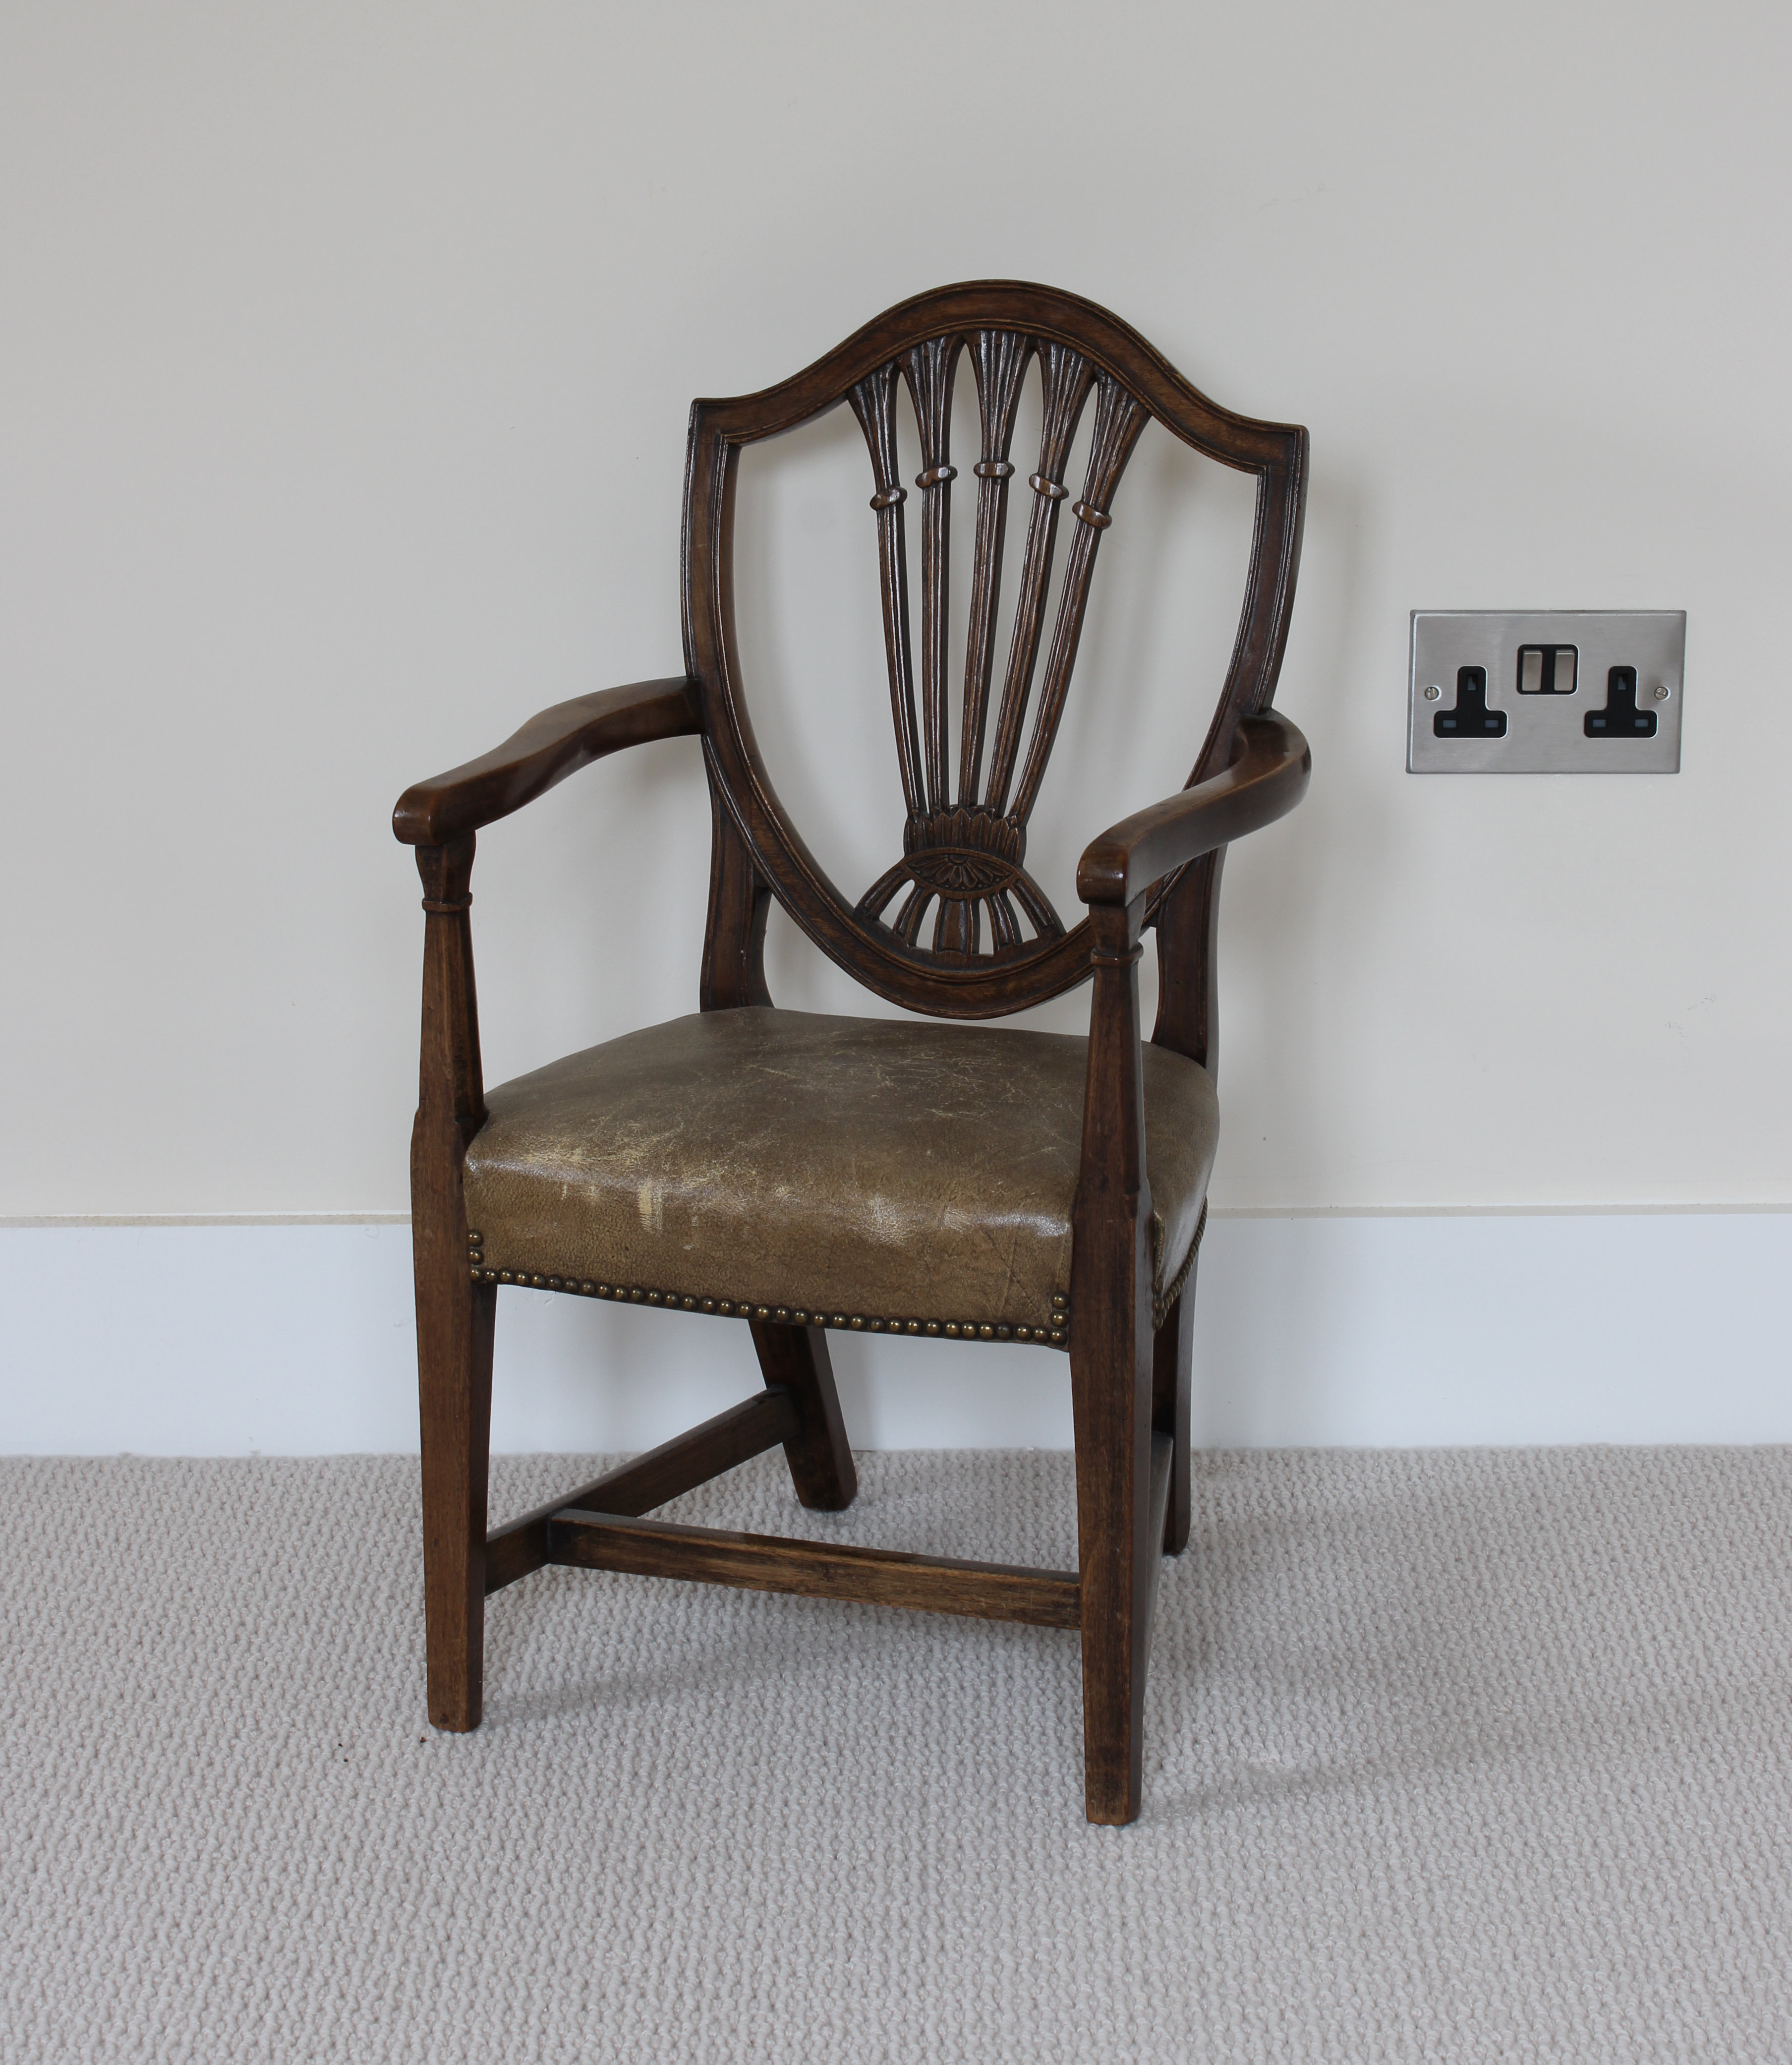 George III Hepplewhite style shield back child's chair